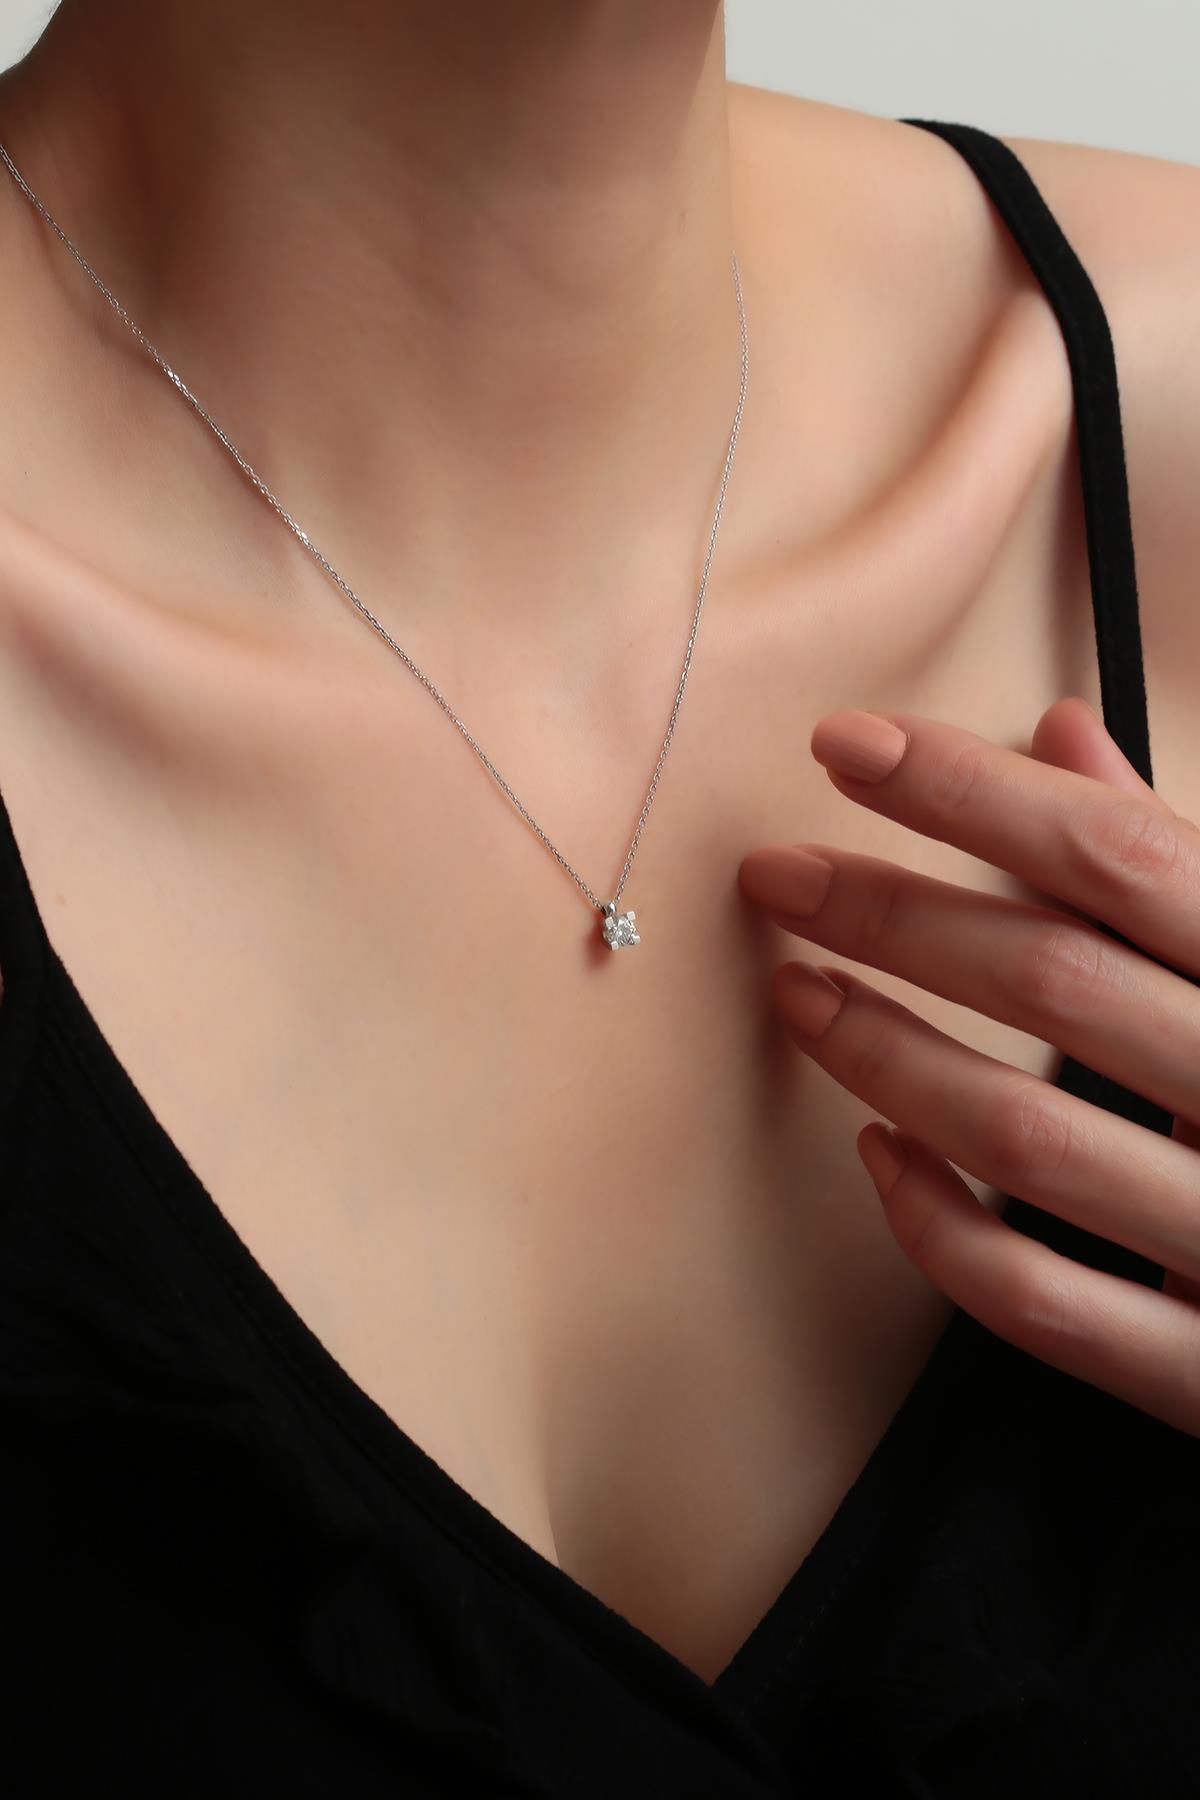 Details more than 187 14 carat diamond necklace latest